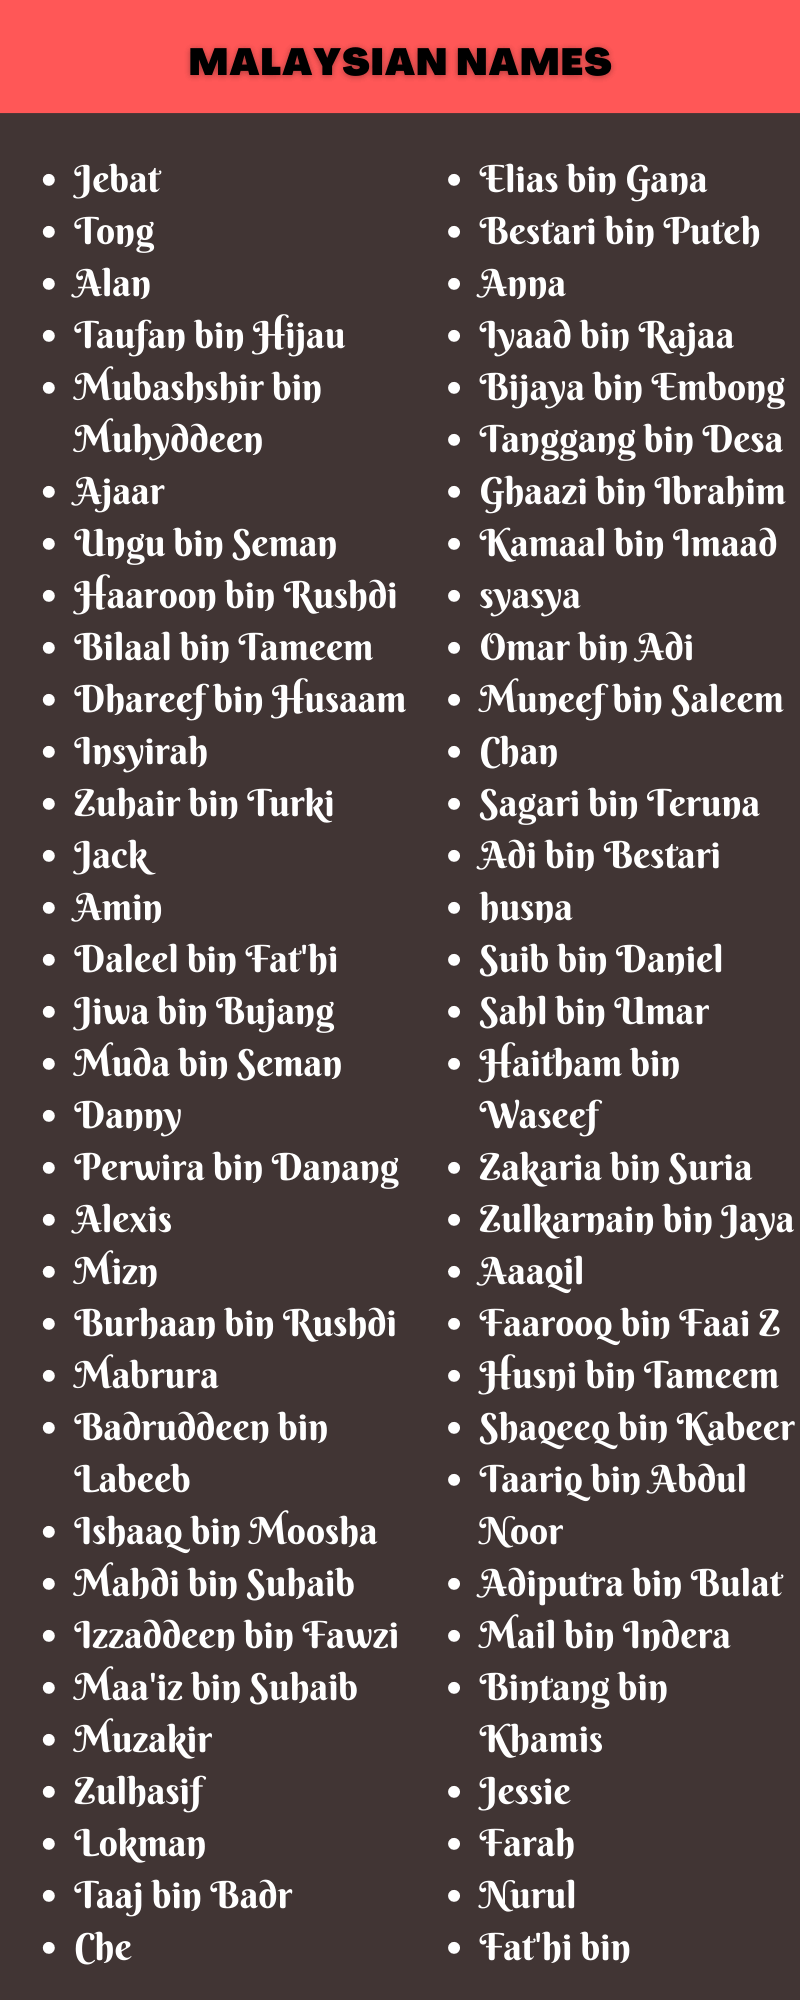 Malaysian Names